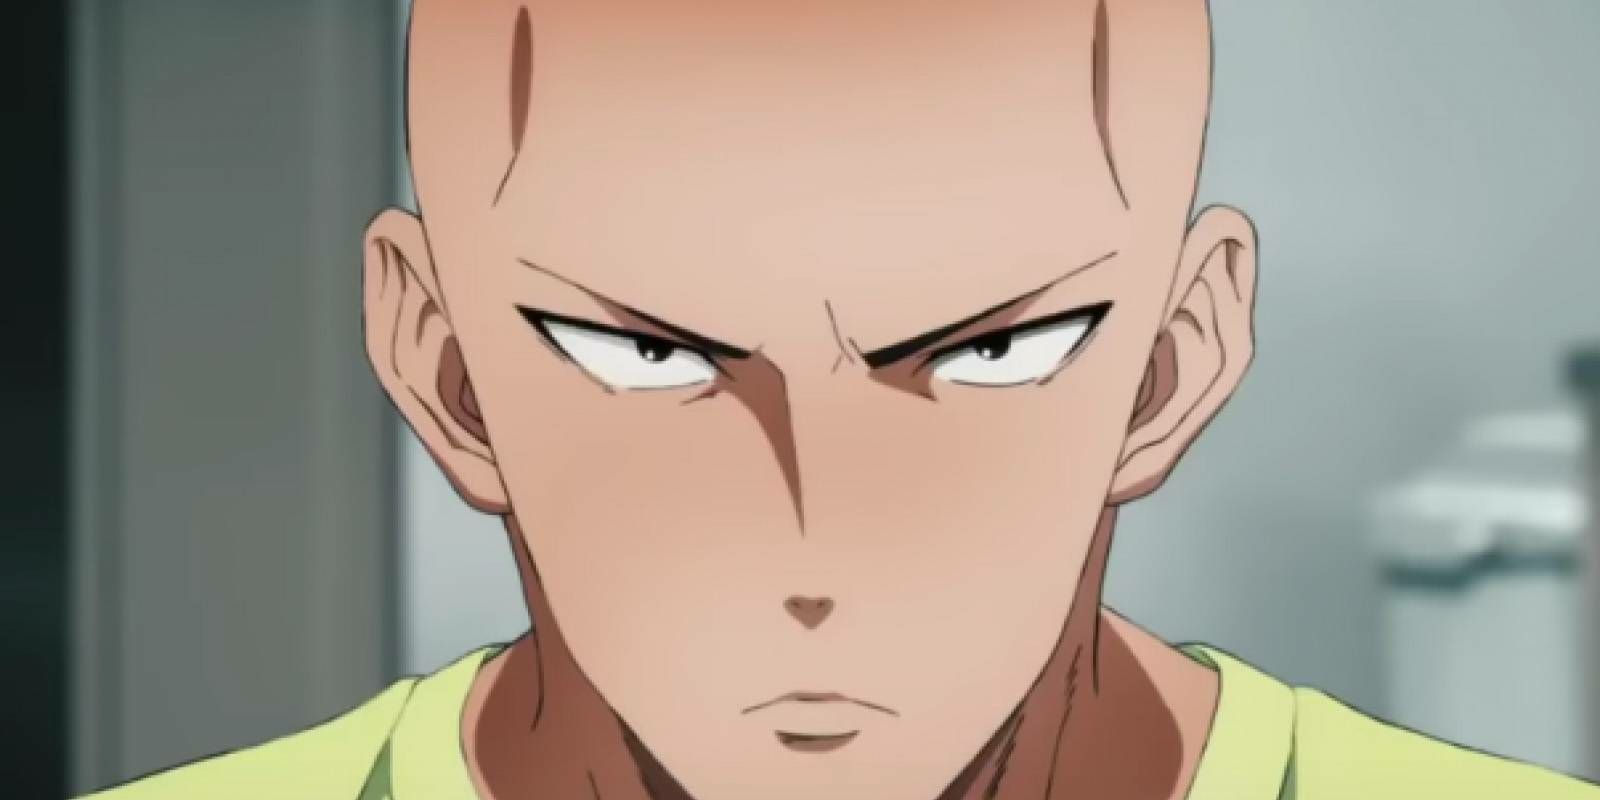 Saitama with his serious face